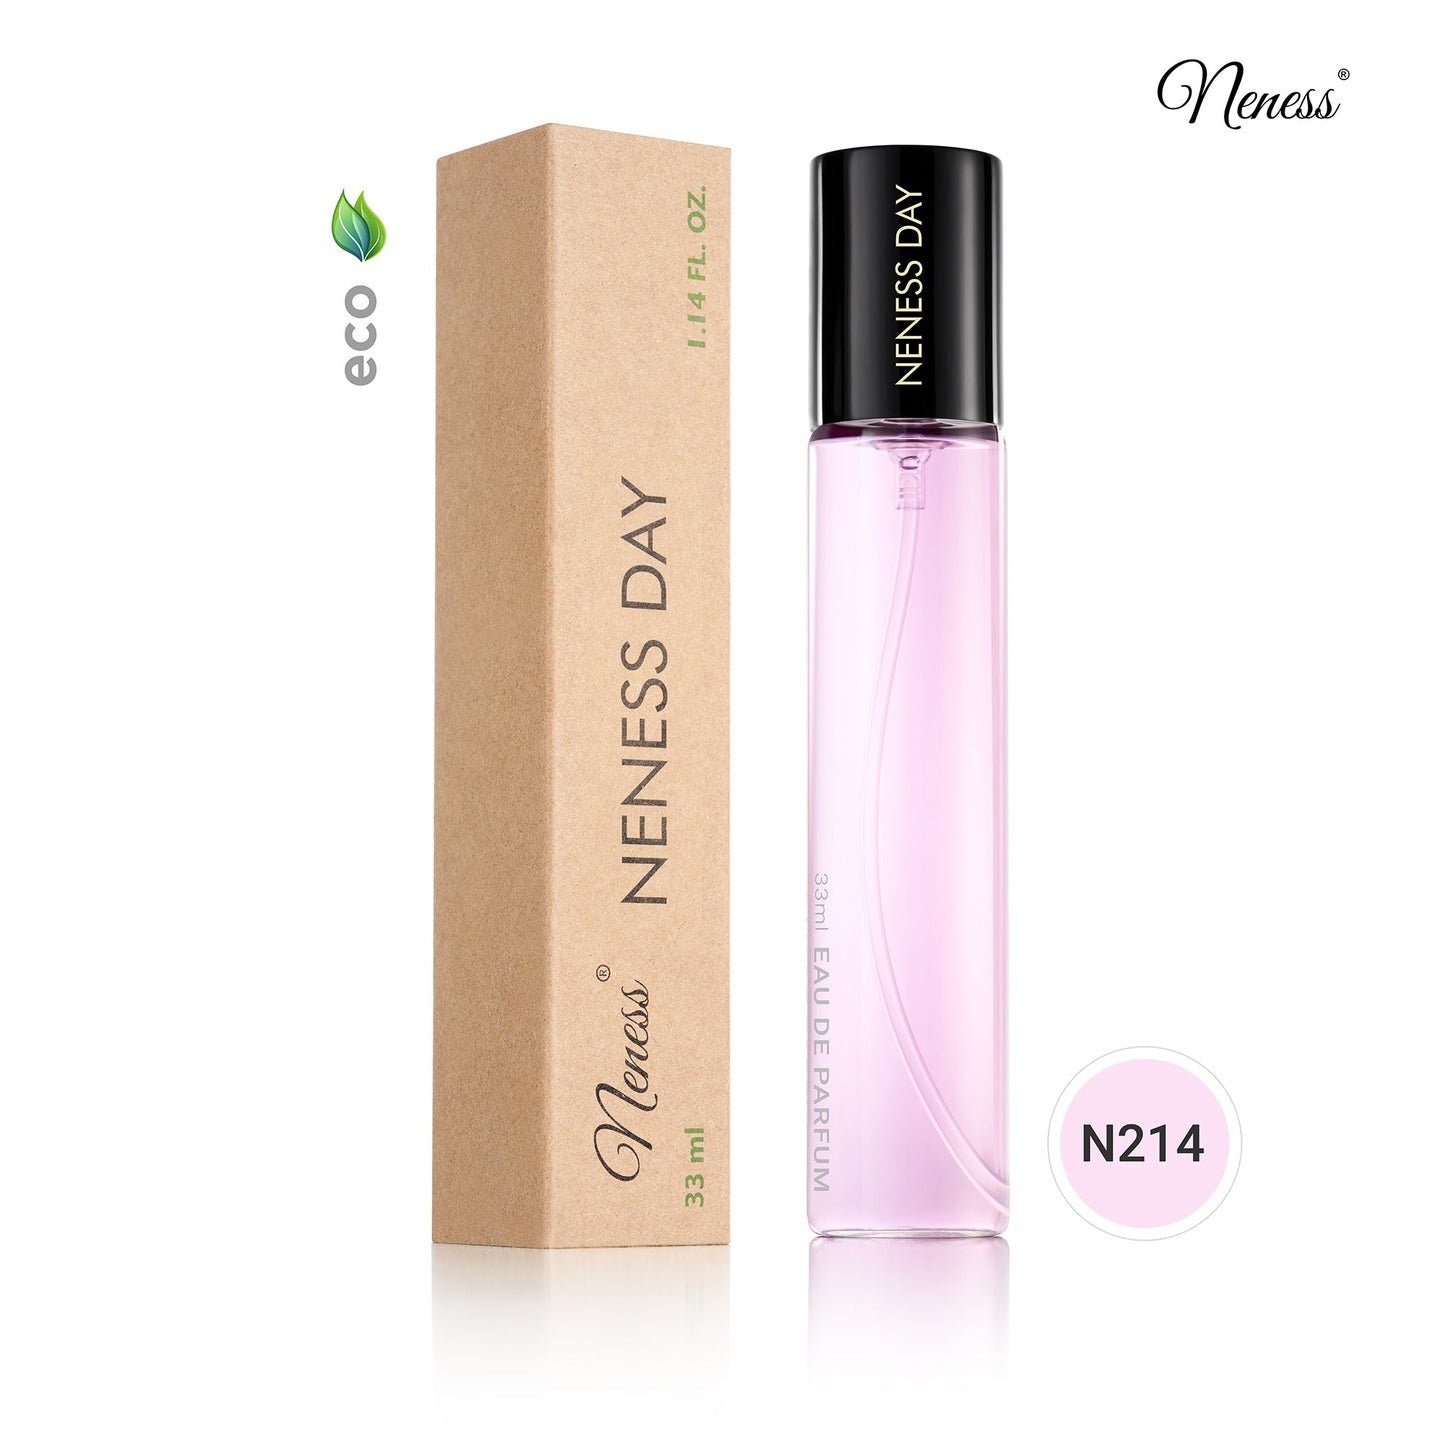 N214. Neness Day - 33 ml - Perfume For Women